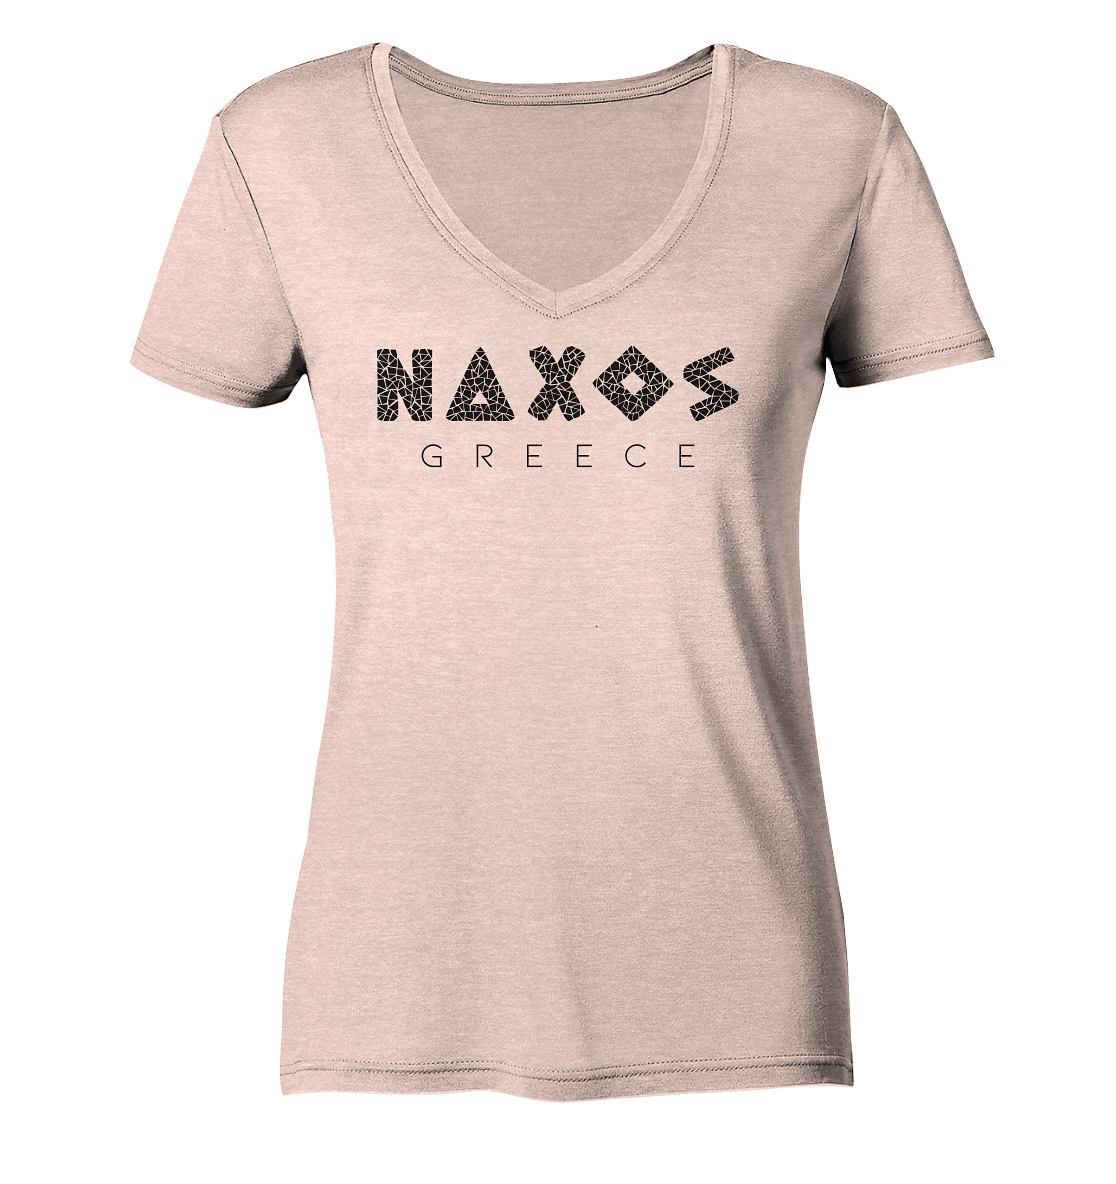 Naxos Greece Mosaic - Ladies Organic V-Neck Shirt